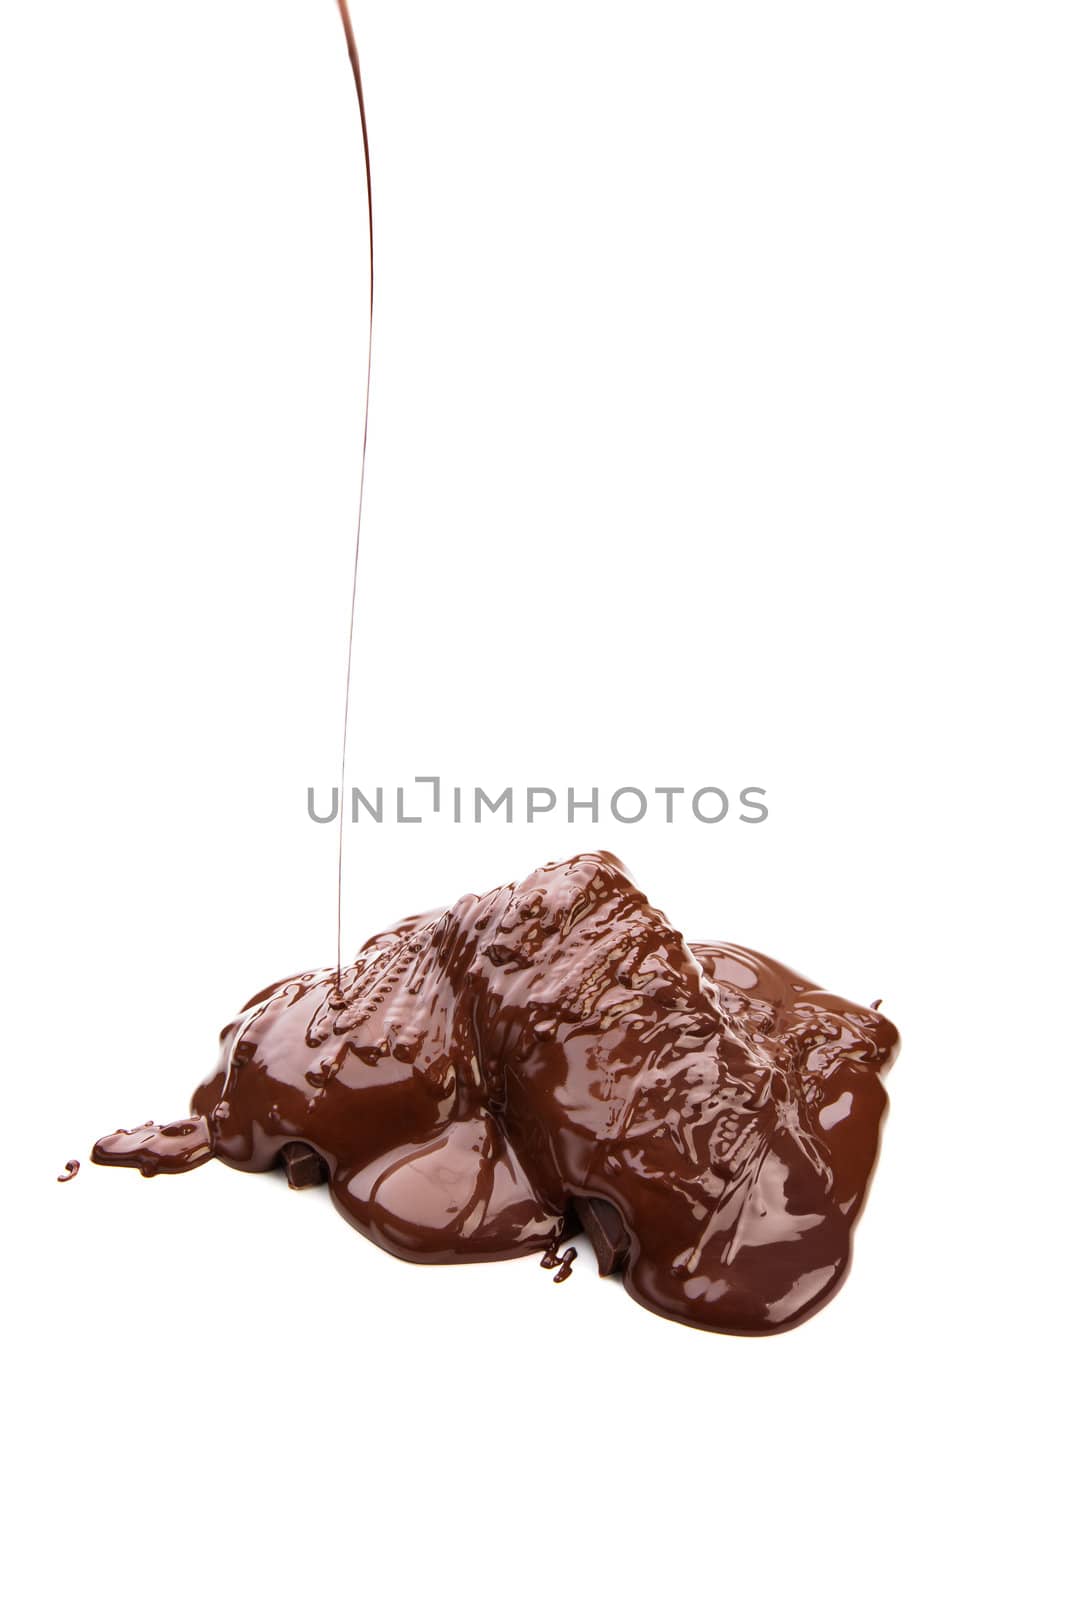 Melted chocolate by igor_stramyk